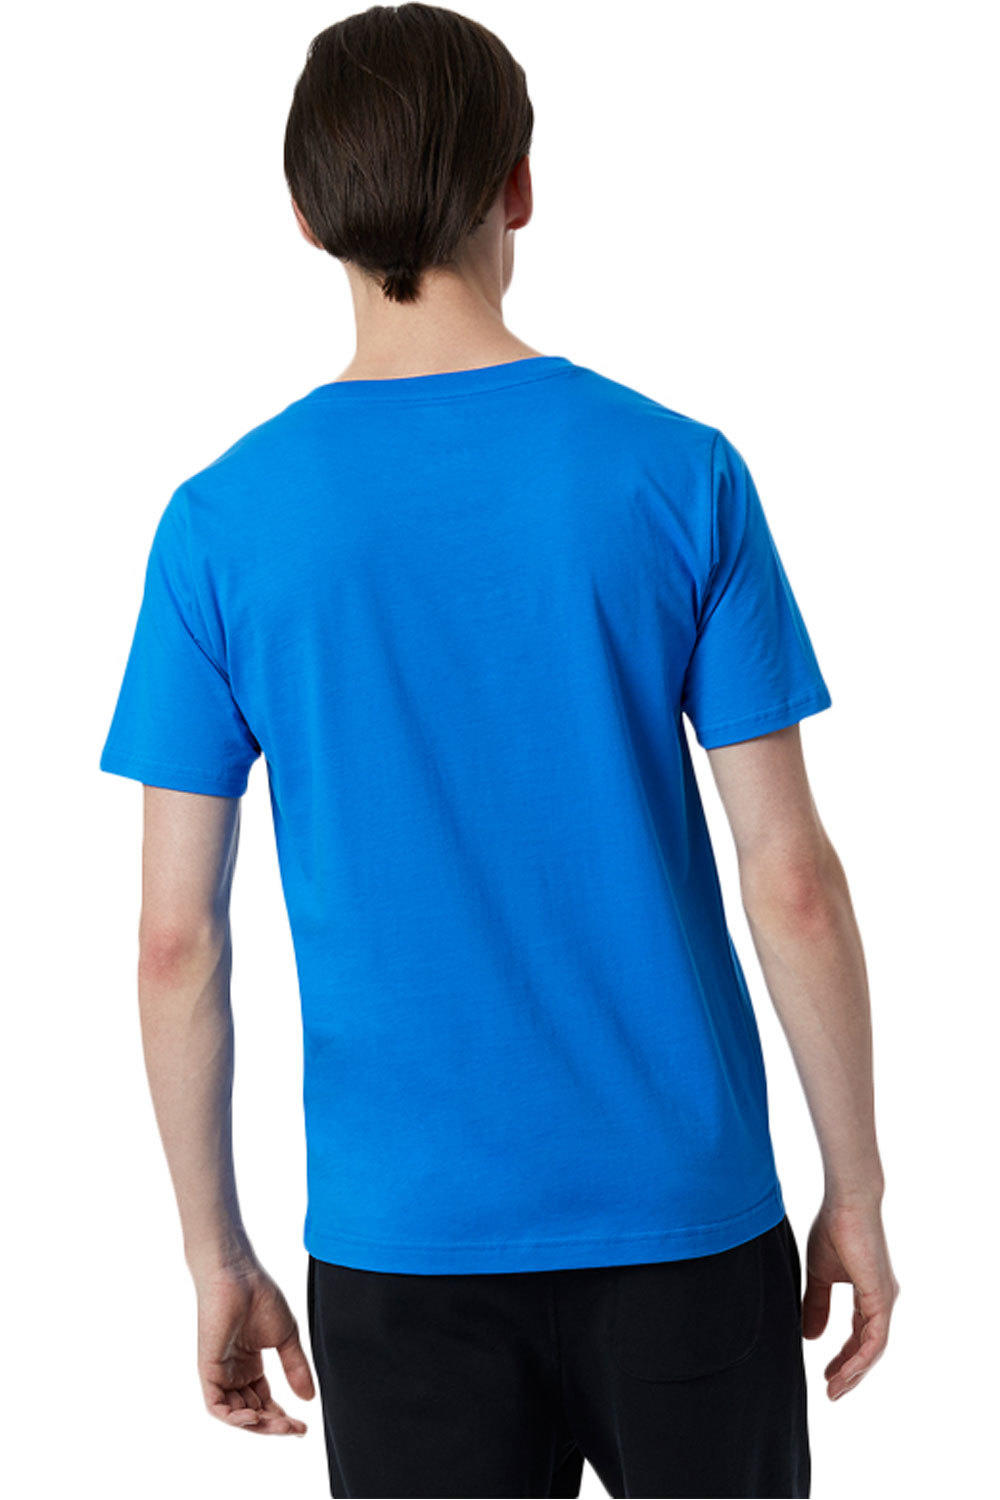 New Balance camiseta manga corta hombre Essentials Stacked Logo vista detalle